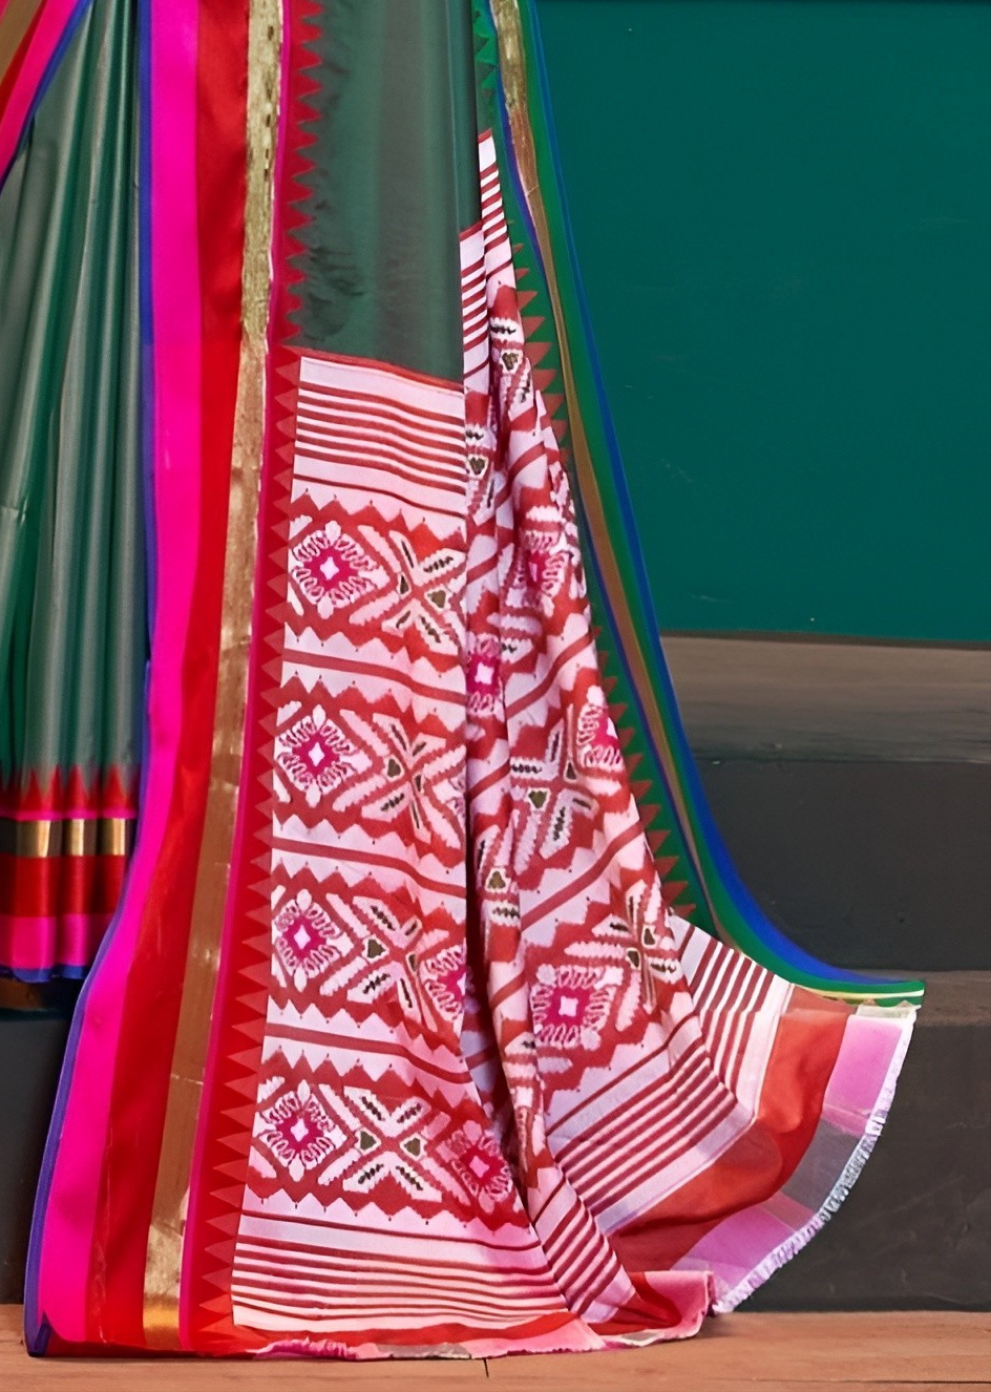 EKKTARA Saree For Women Green Colour Handloom Silk Saree With Unstitched Blouse